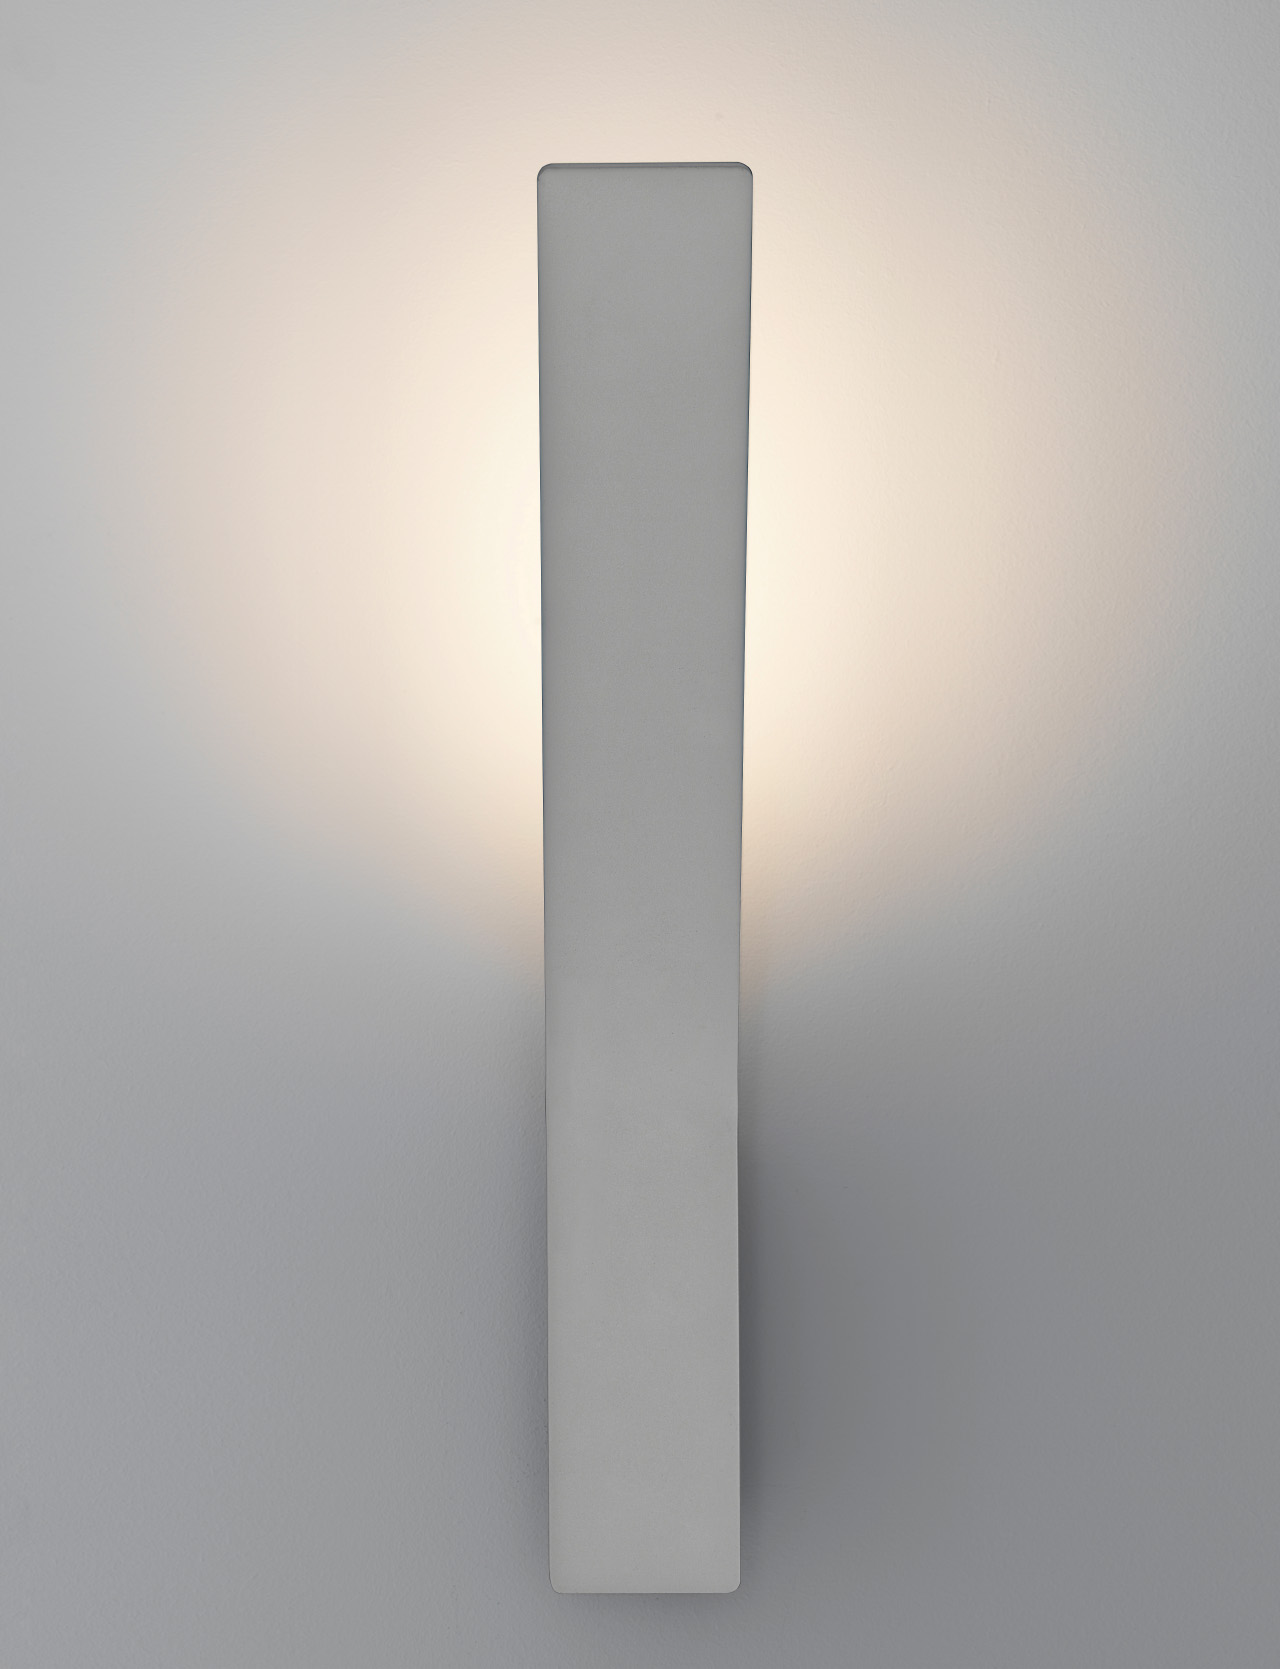 Lama-Lamp for Wall/Ceiling